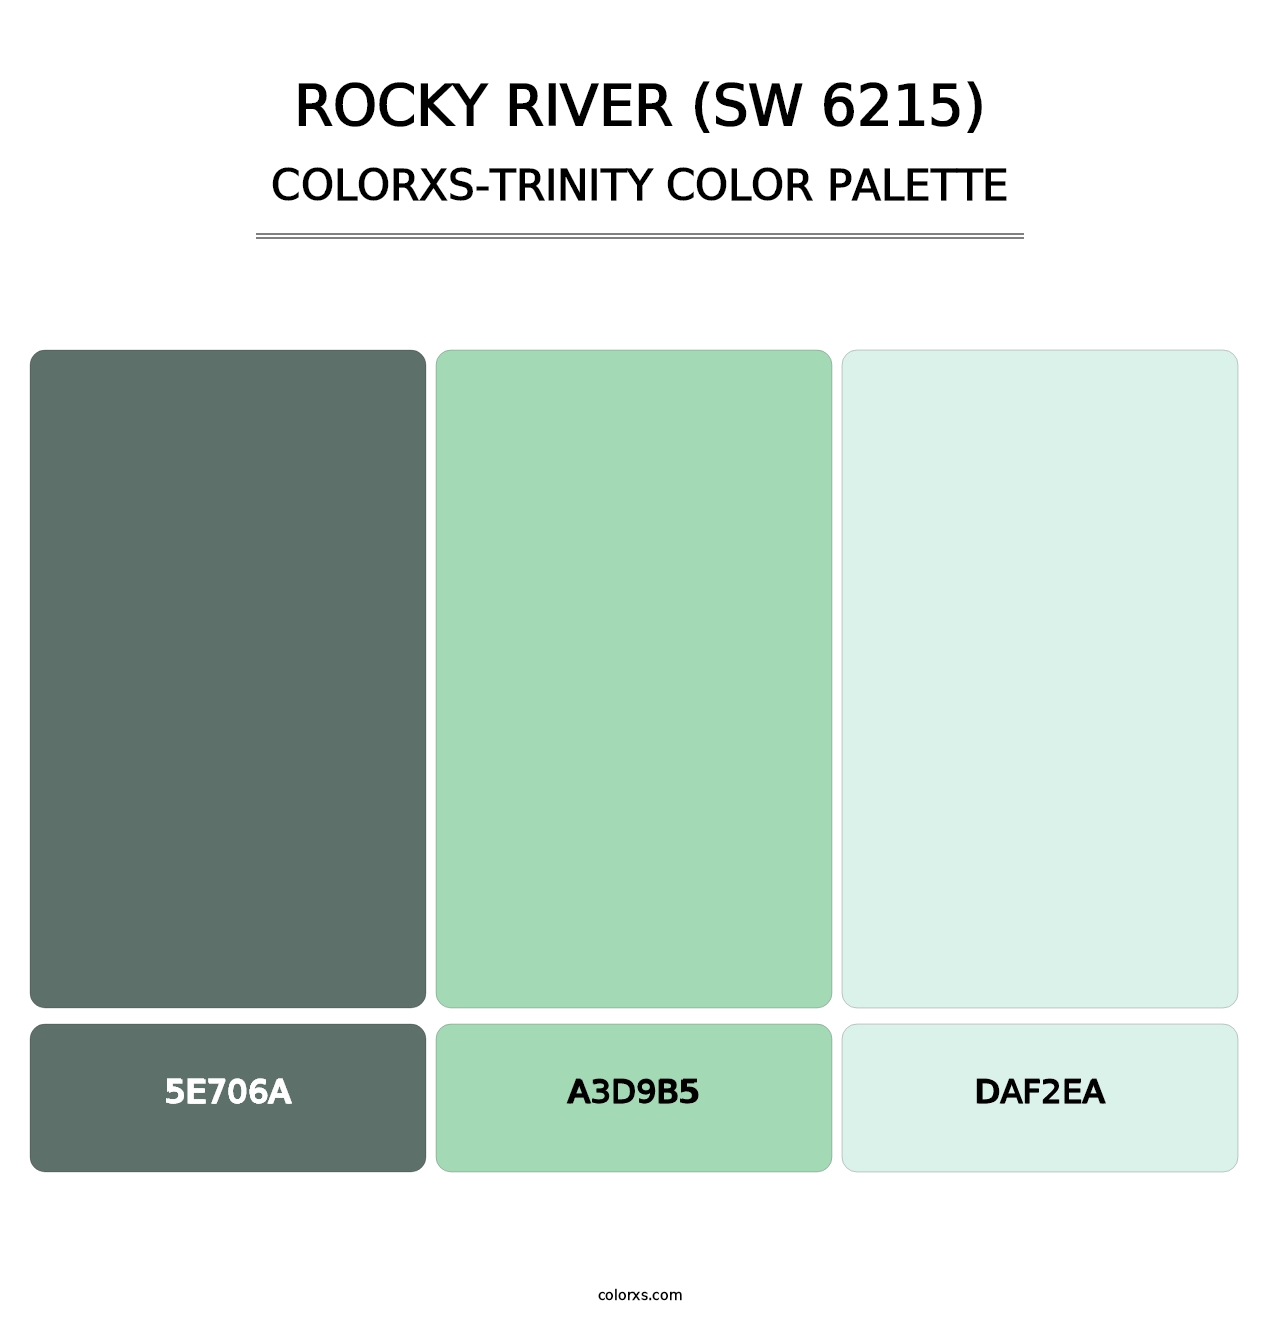 Rocky River (SW 6215) - Colorxs Trinity Palette